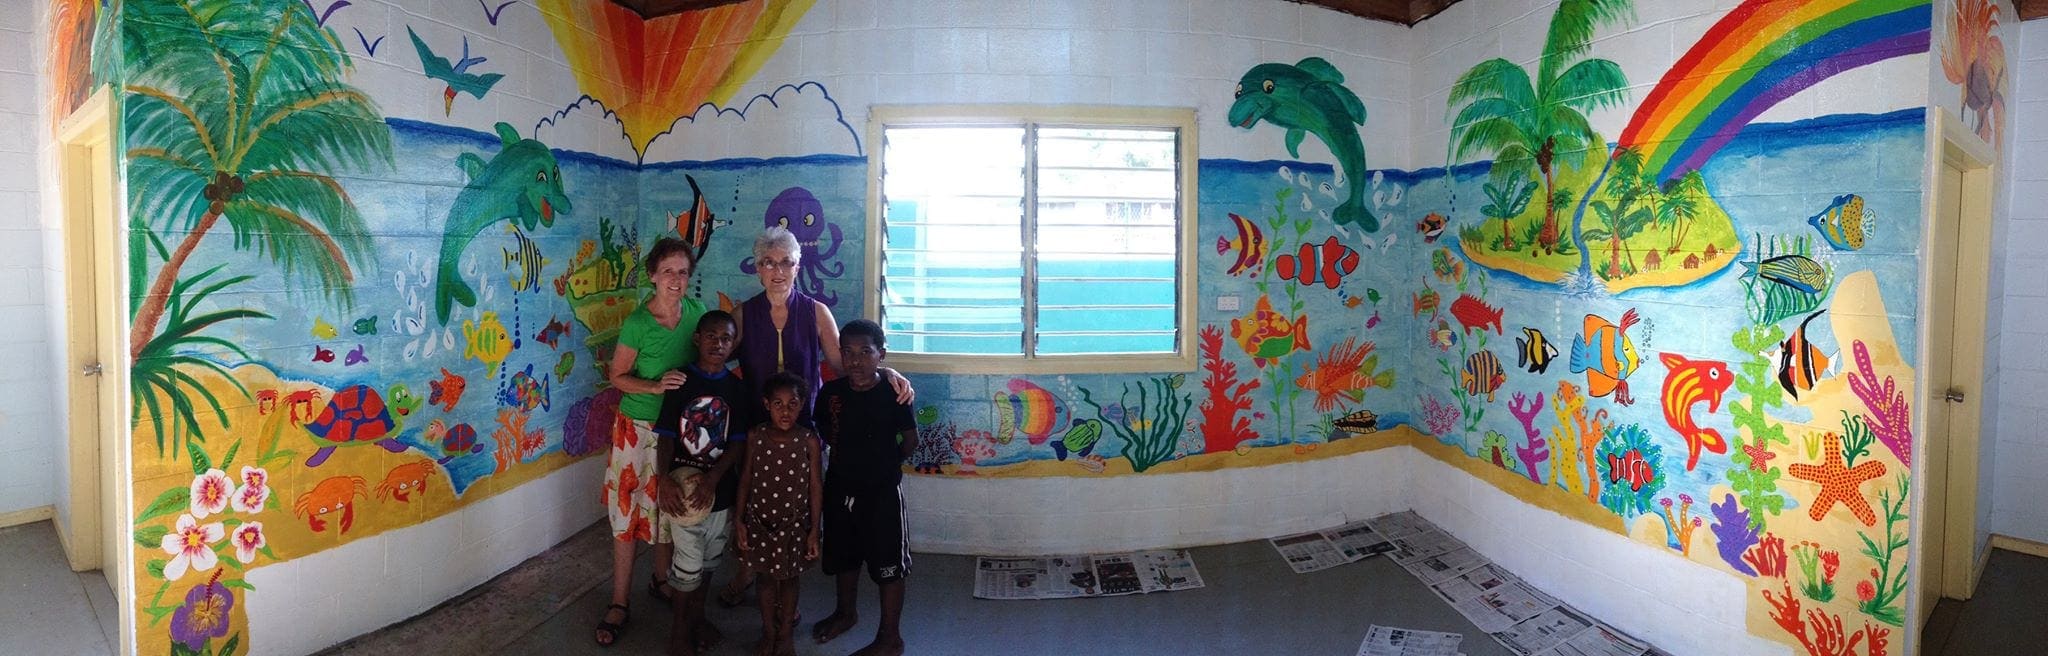 Iris Landa, left, standing in a repainted "Happy Room" with Joy Butler in Papua New Guinea. (Facebook)